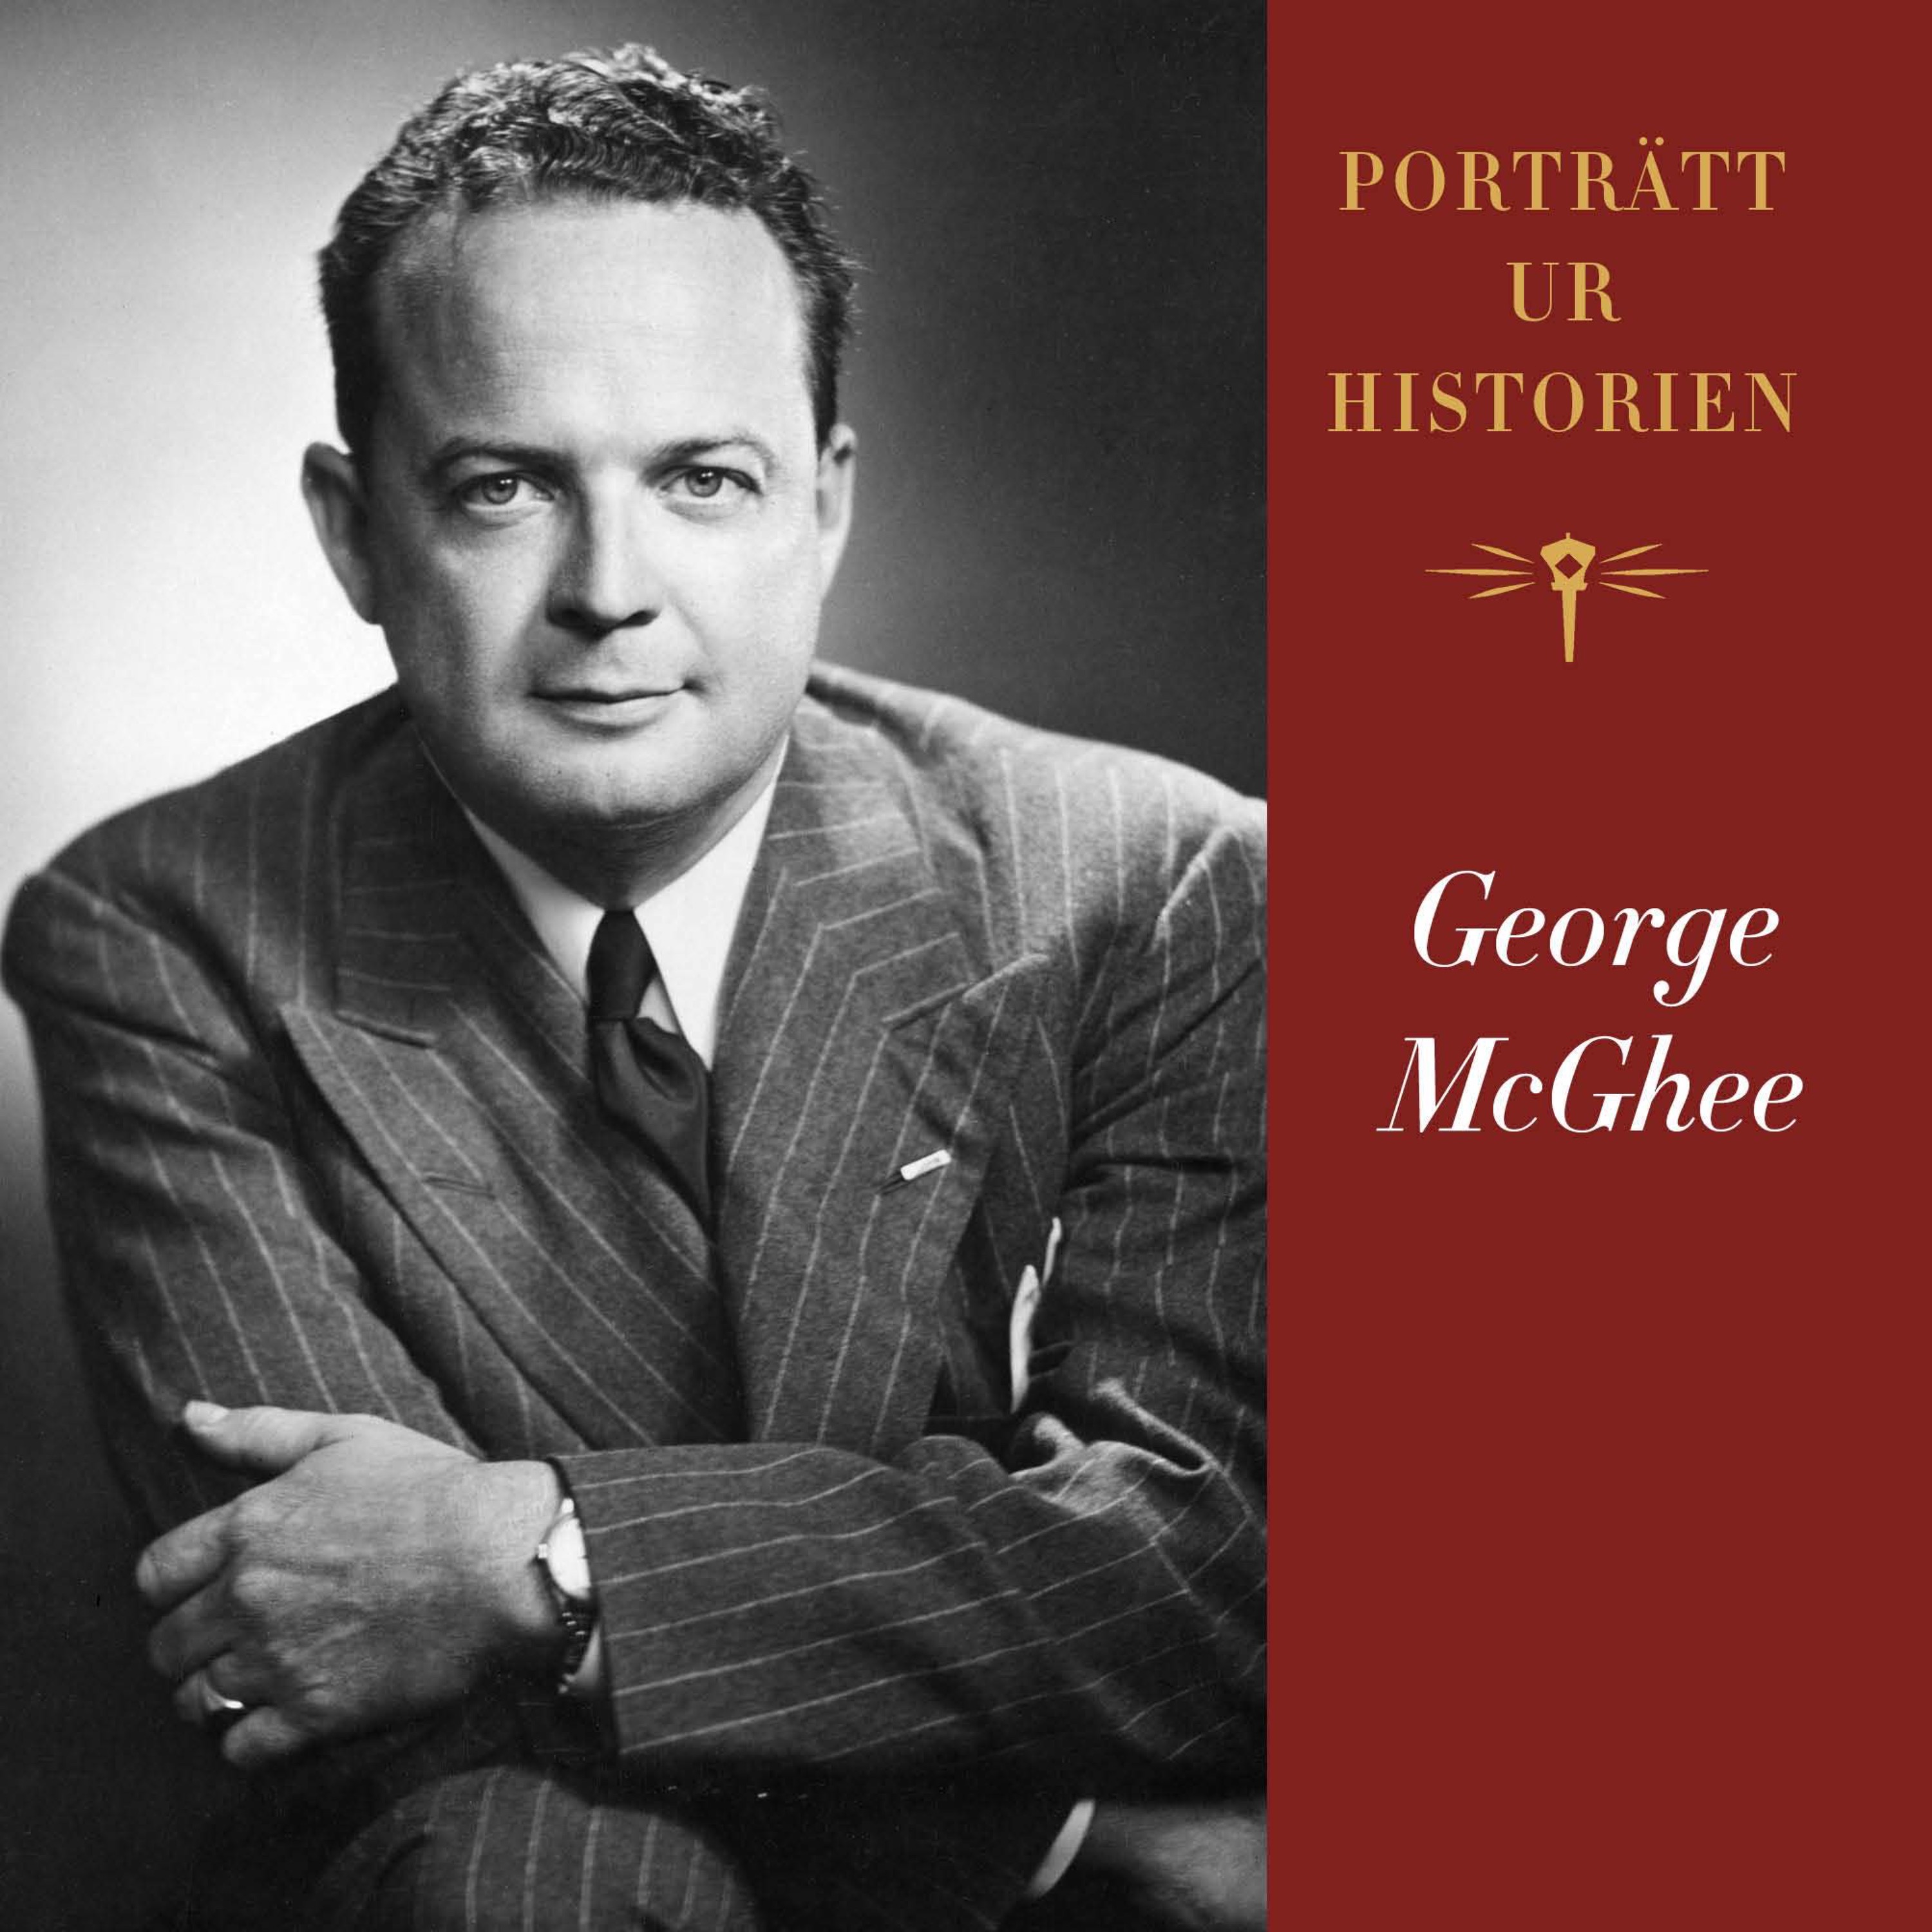 Porträtt ur historien: George McGhee